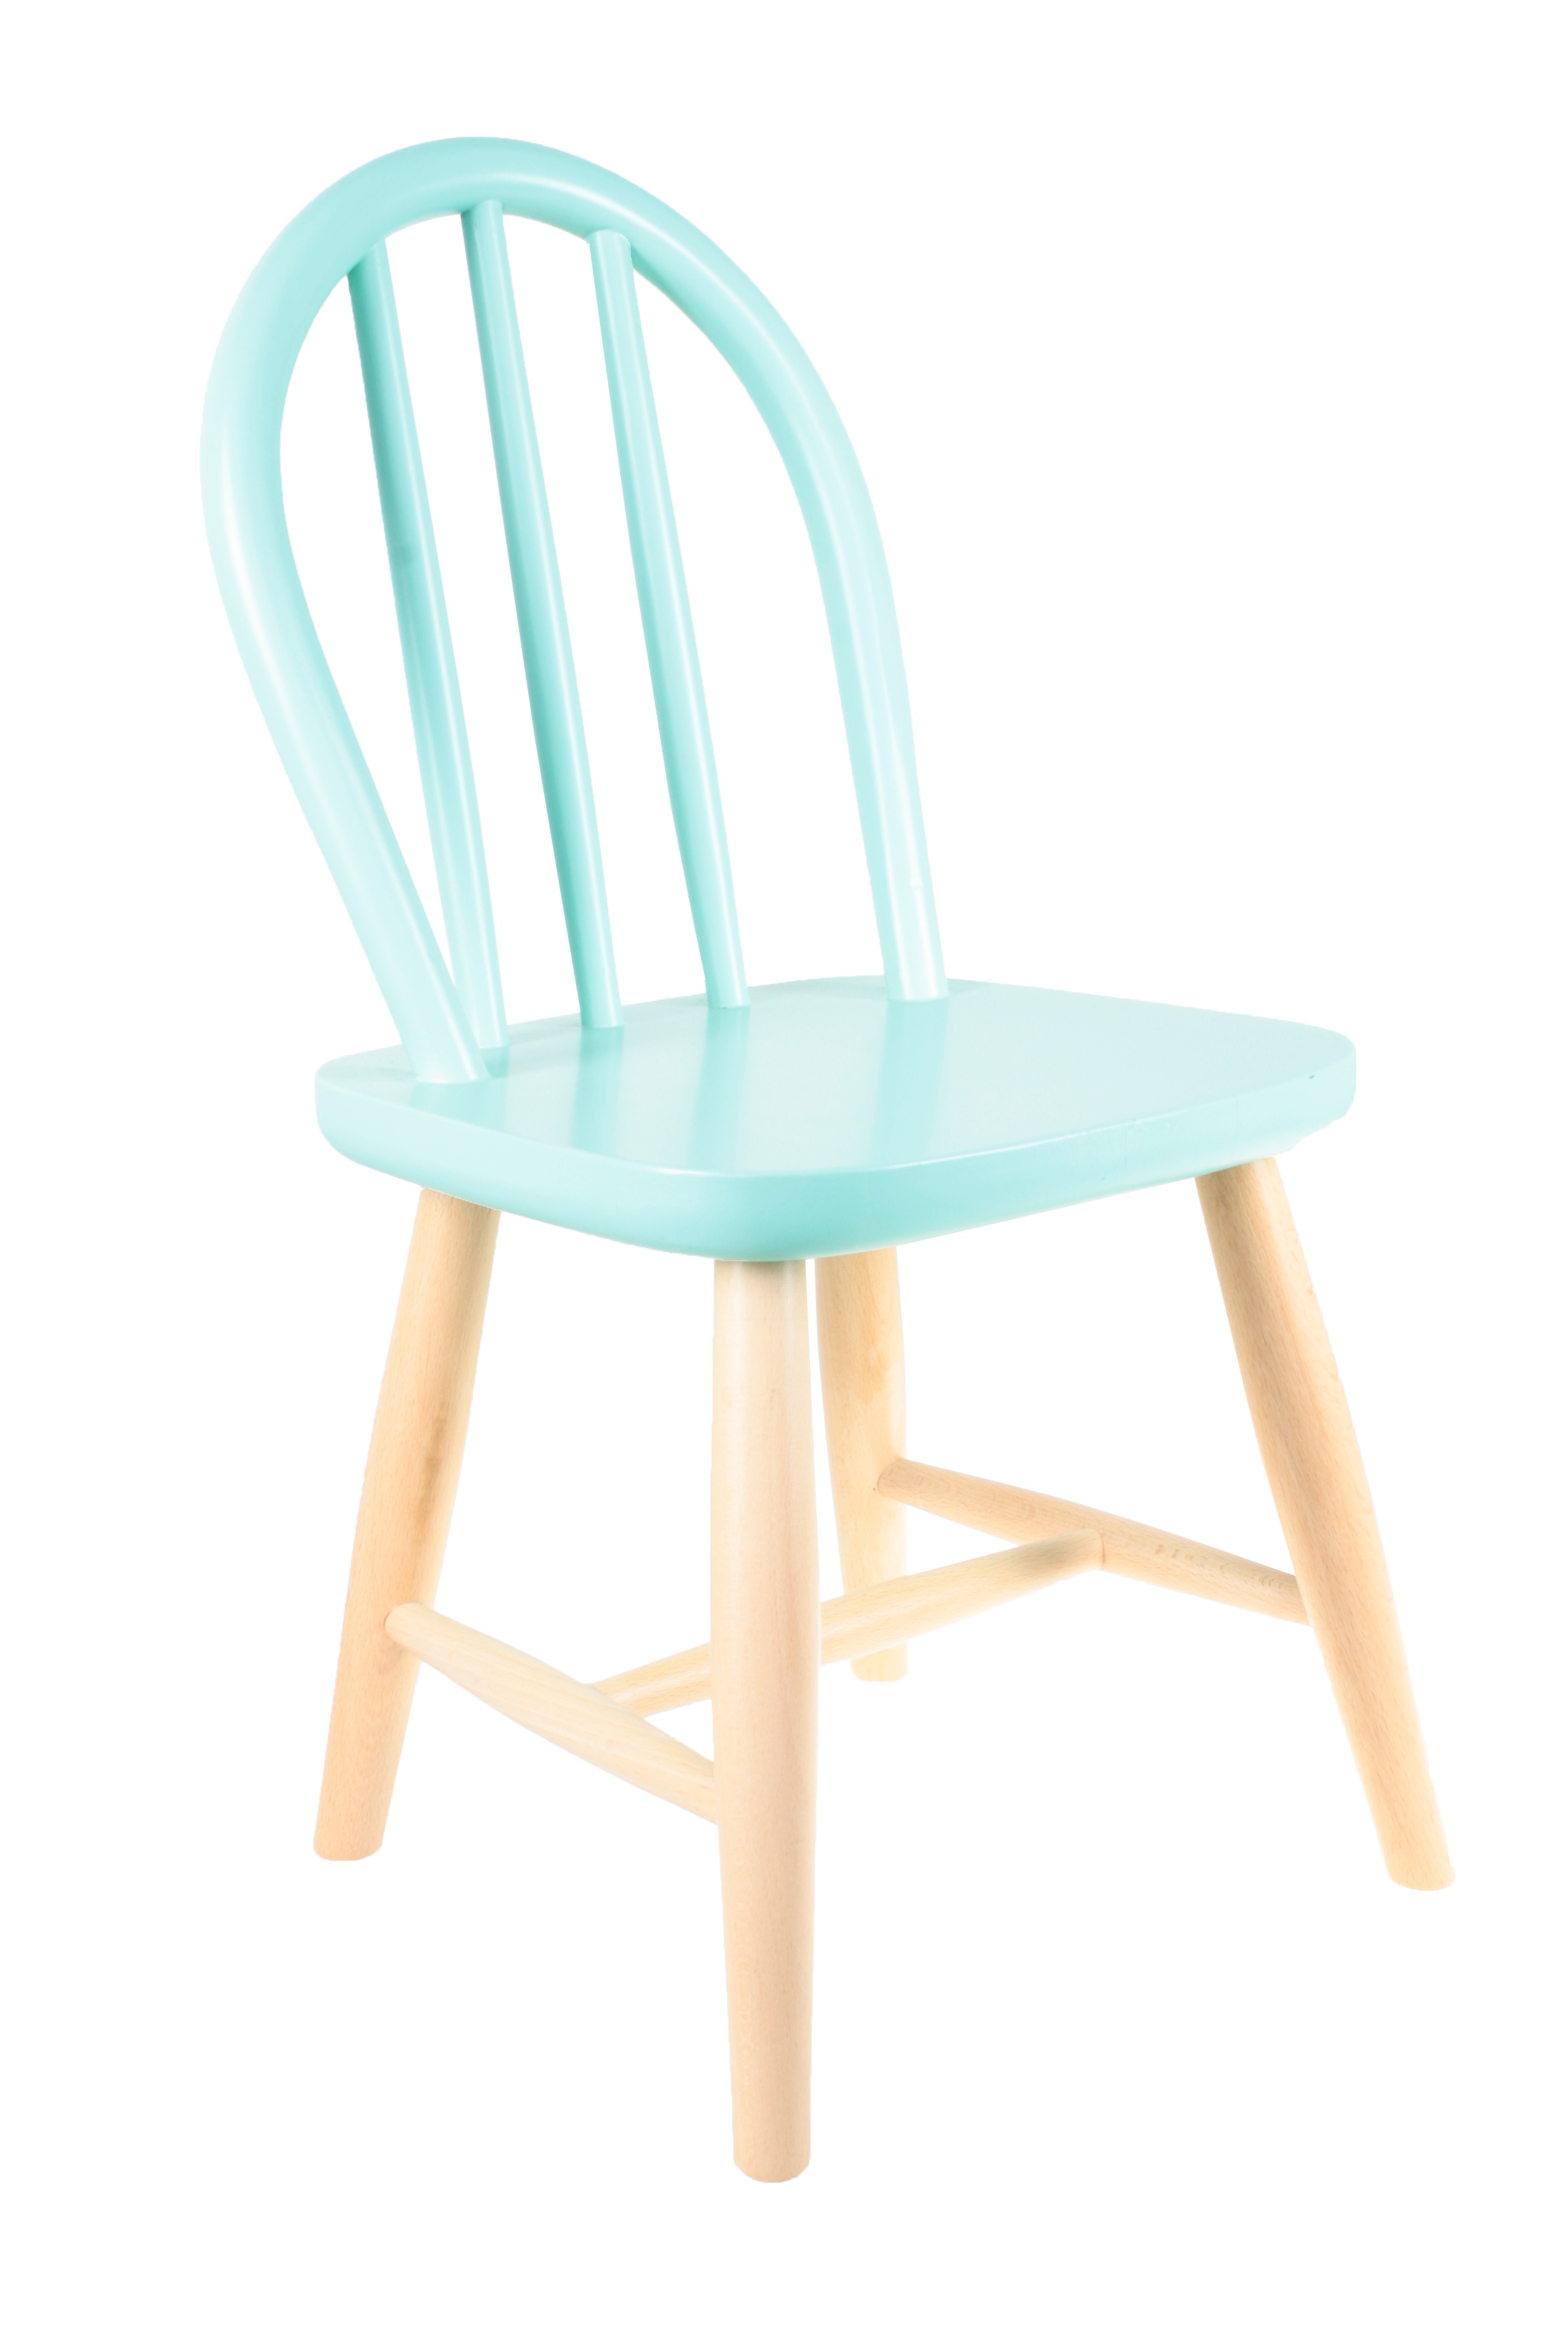 rose in april chaise enfant design pastel